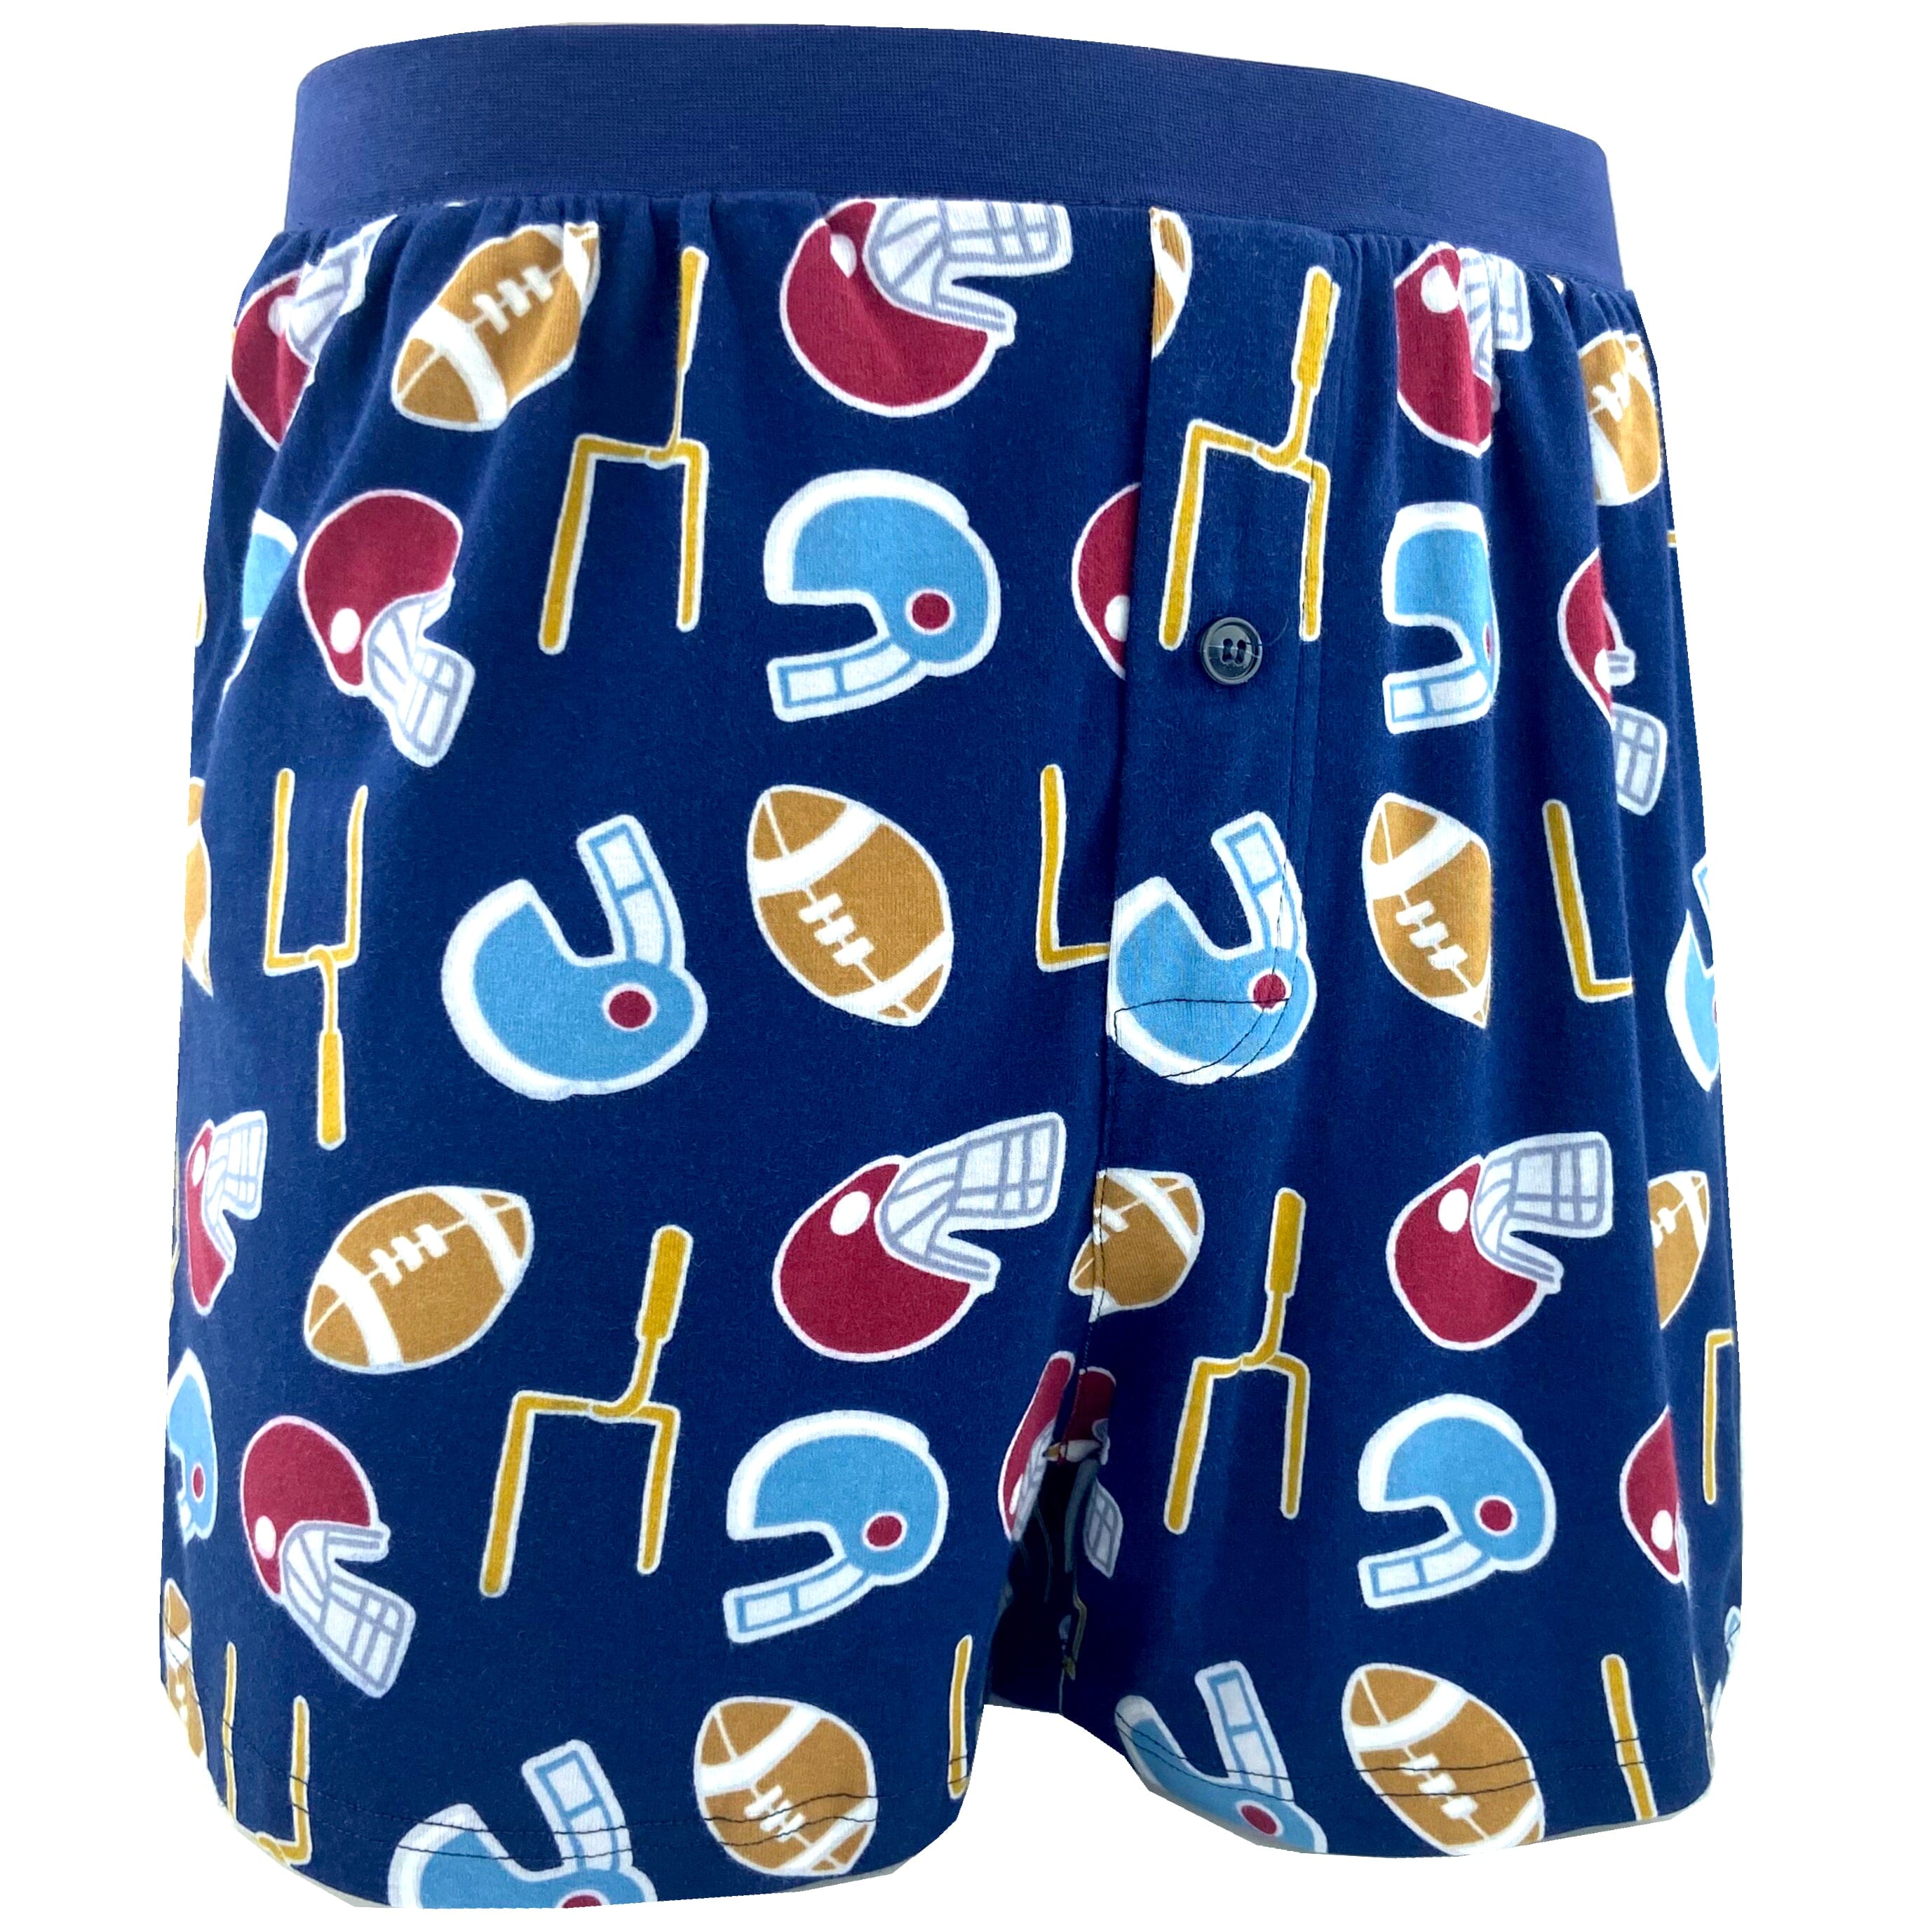 Men's Comfy Sport Themed Football Helmet Patterned Cotton Pajama Shorts